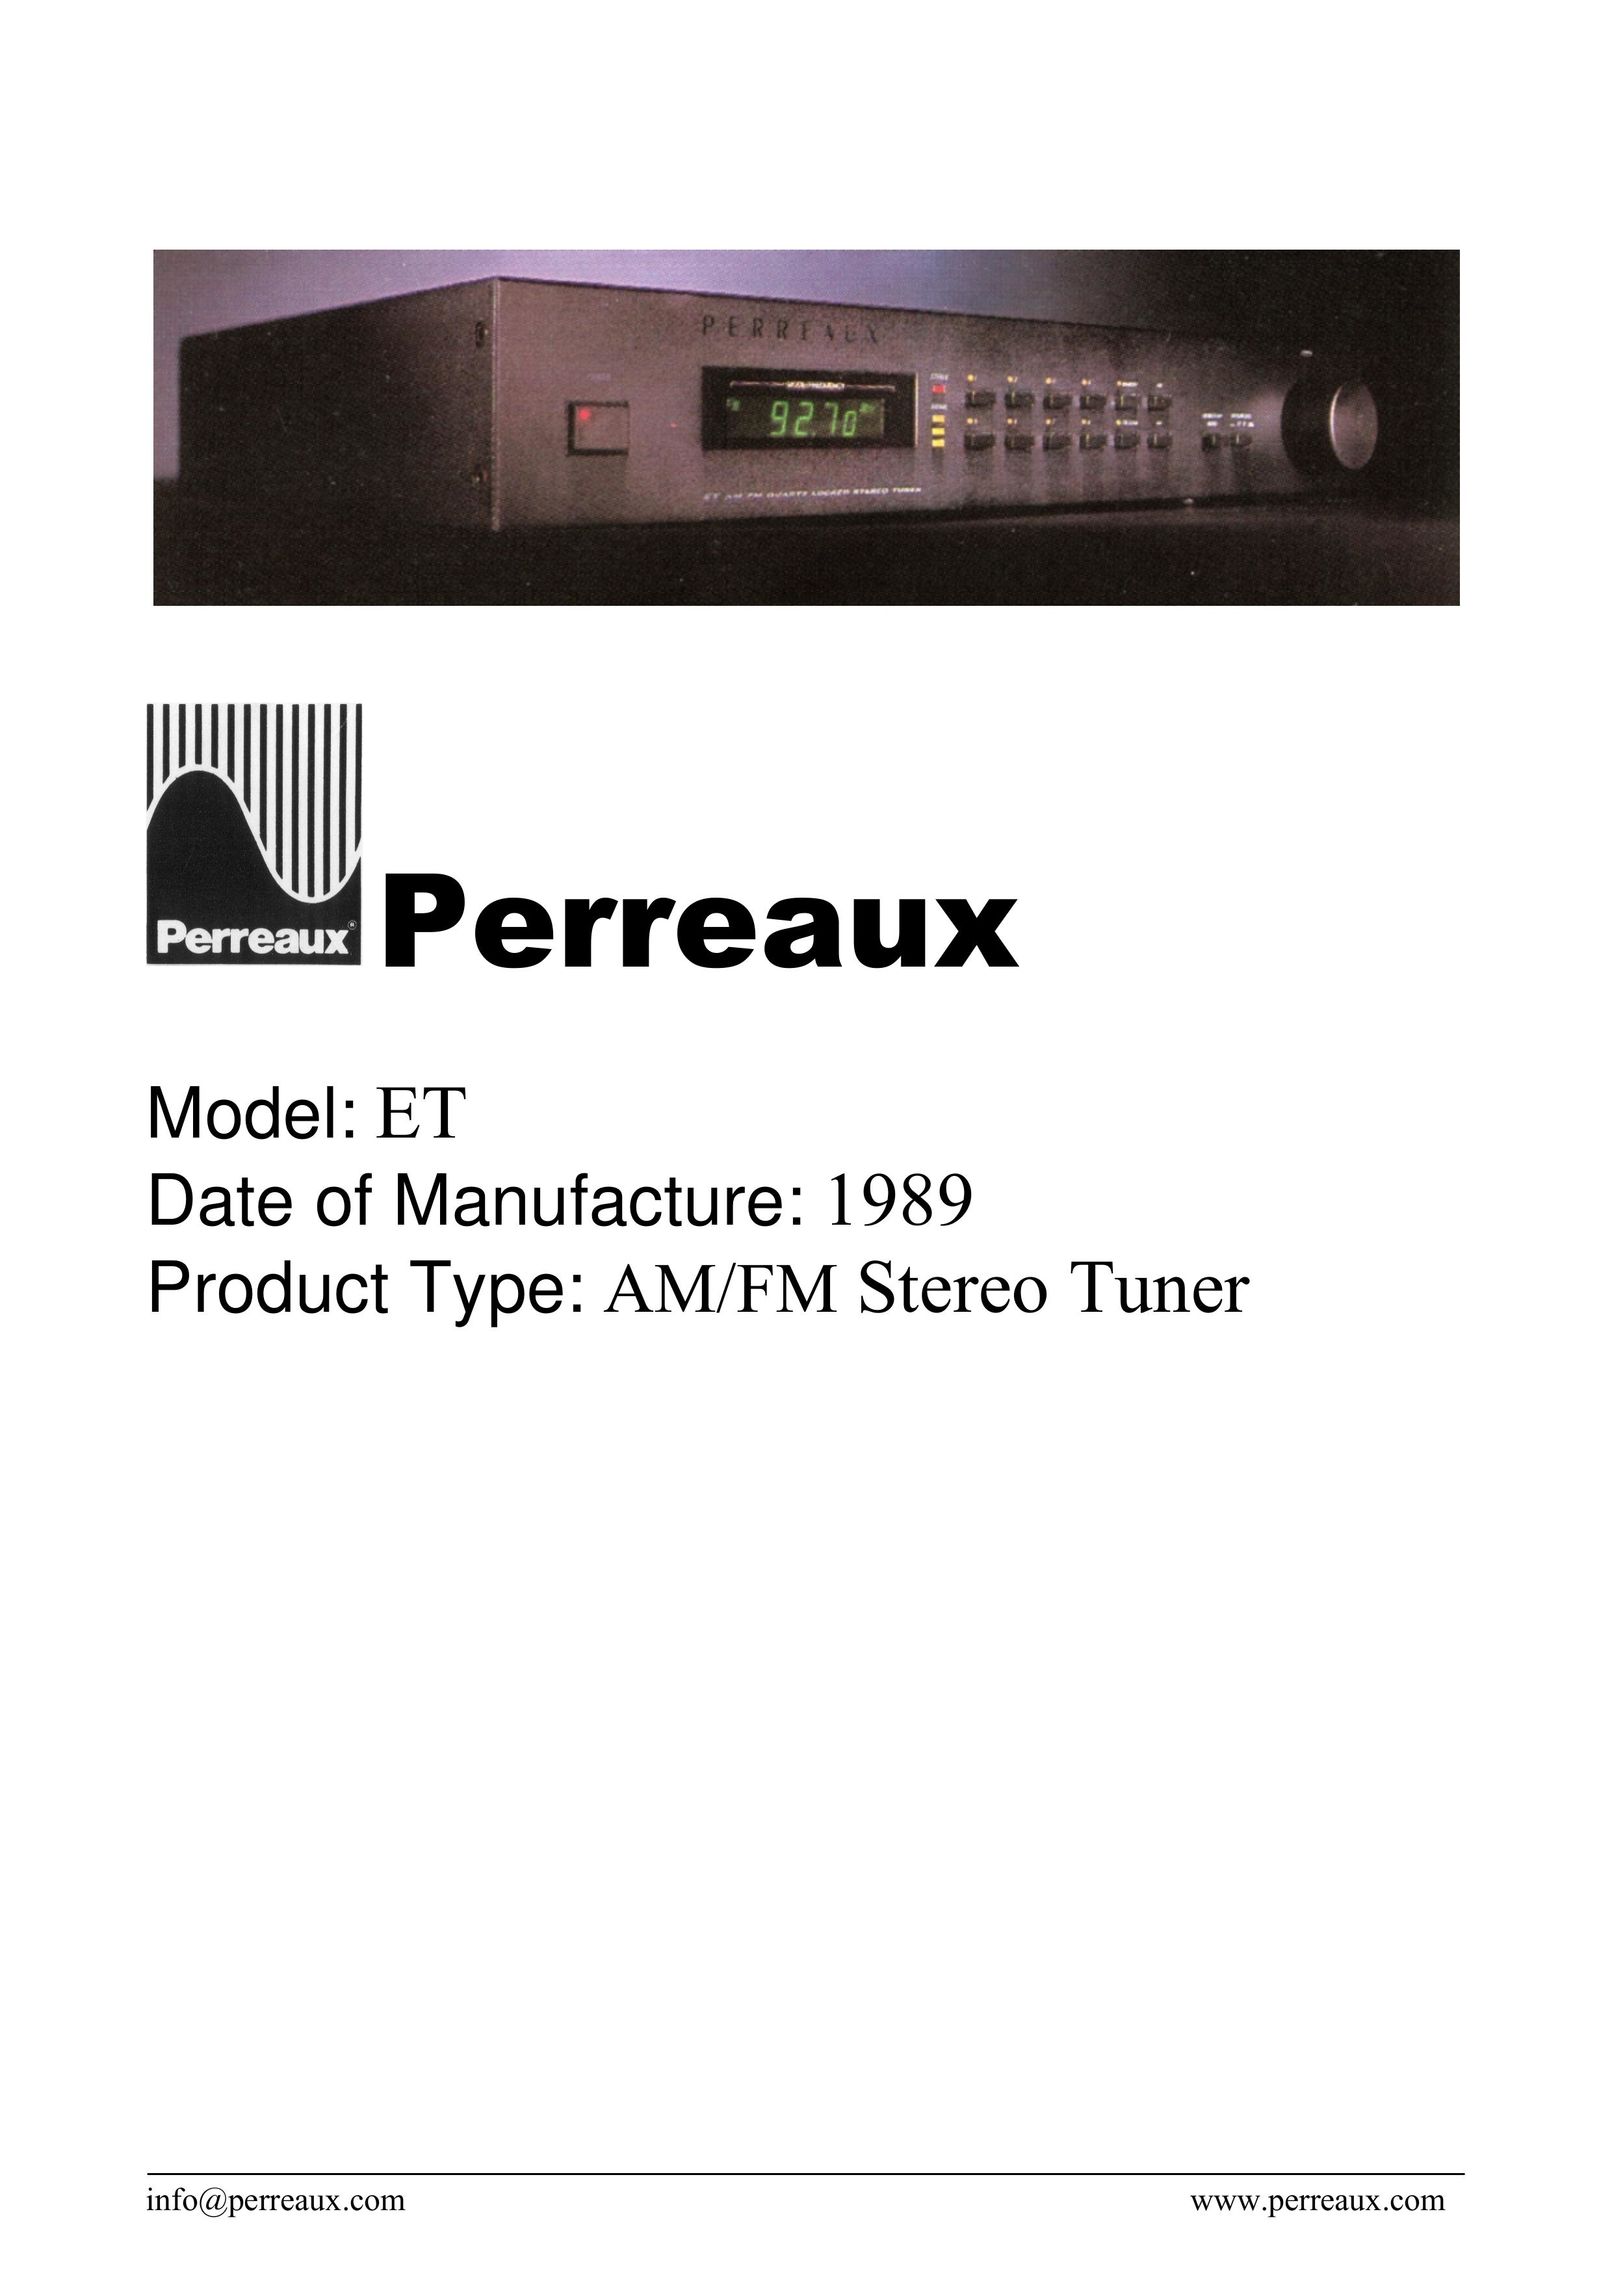 Perreaux ET Car Stereo System User Manual